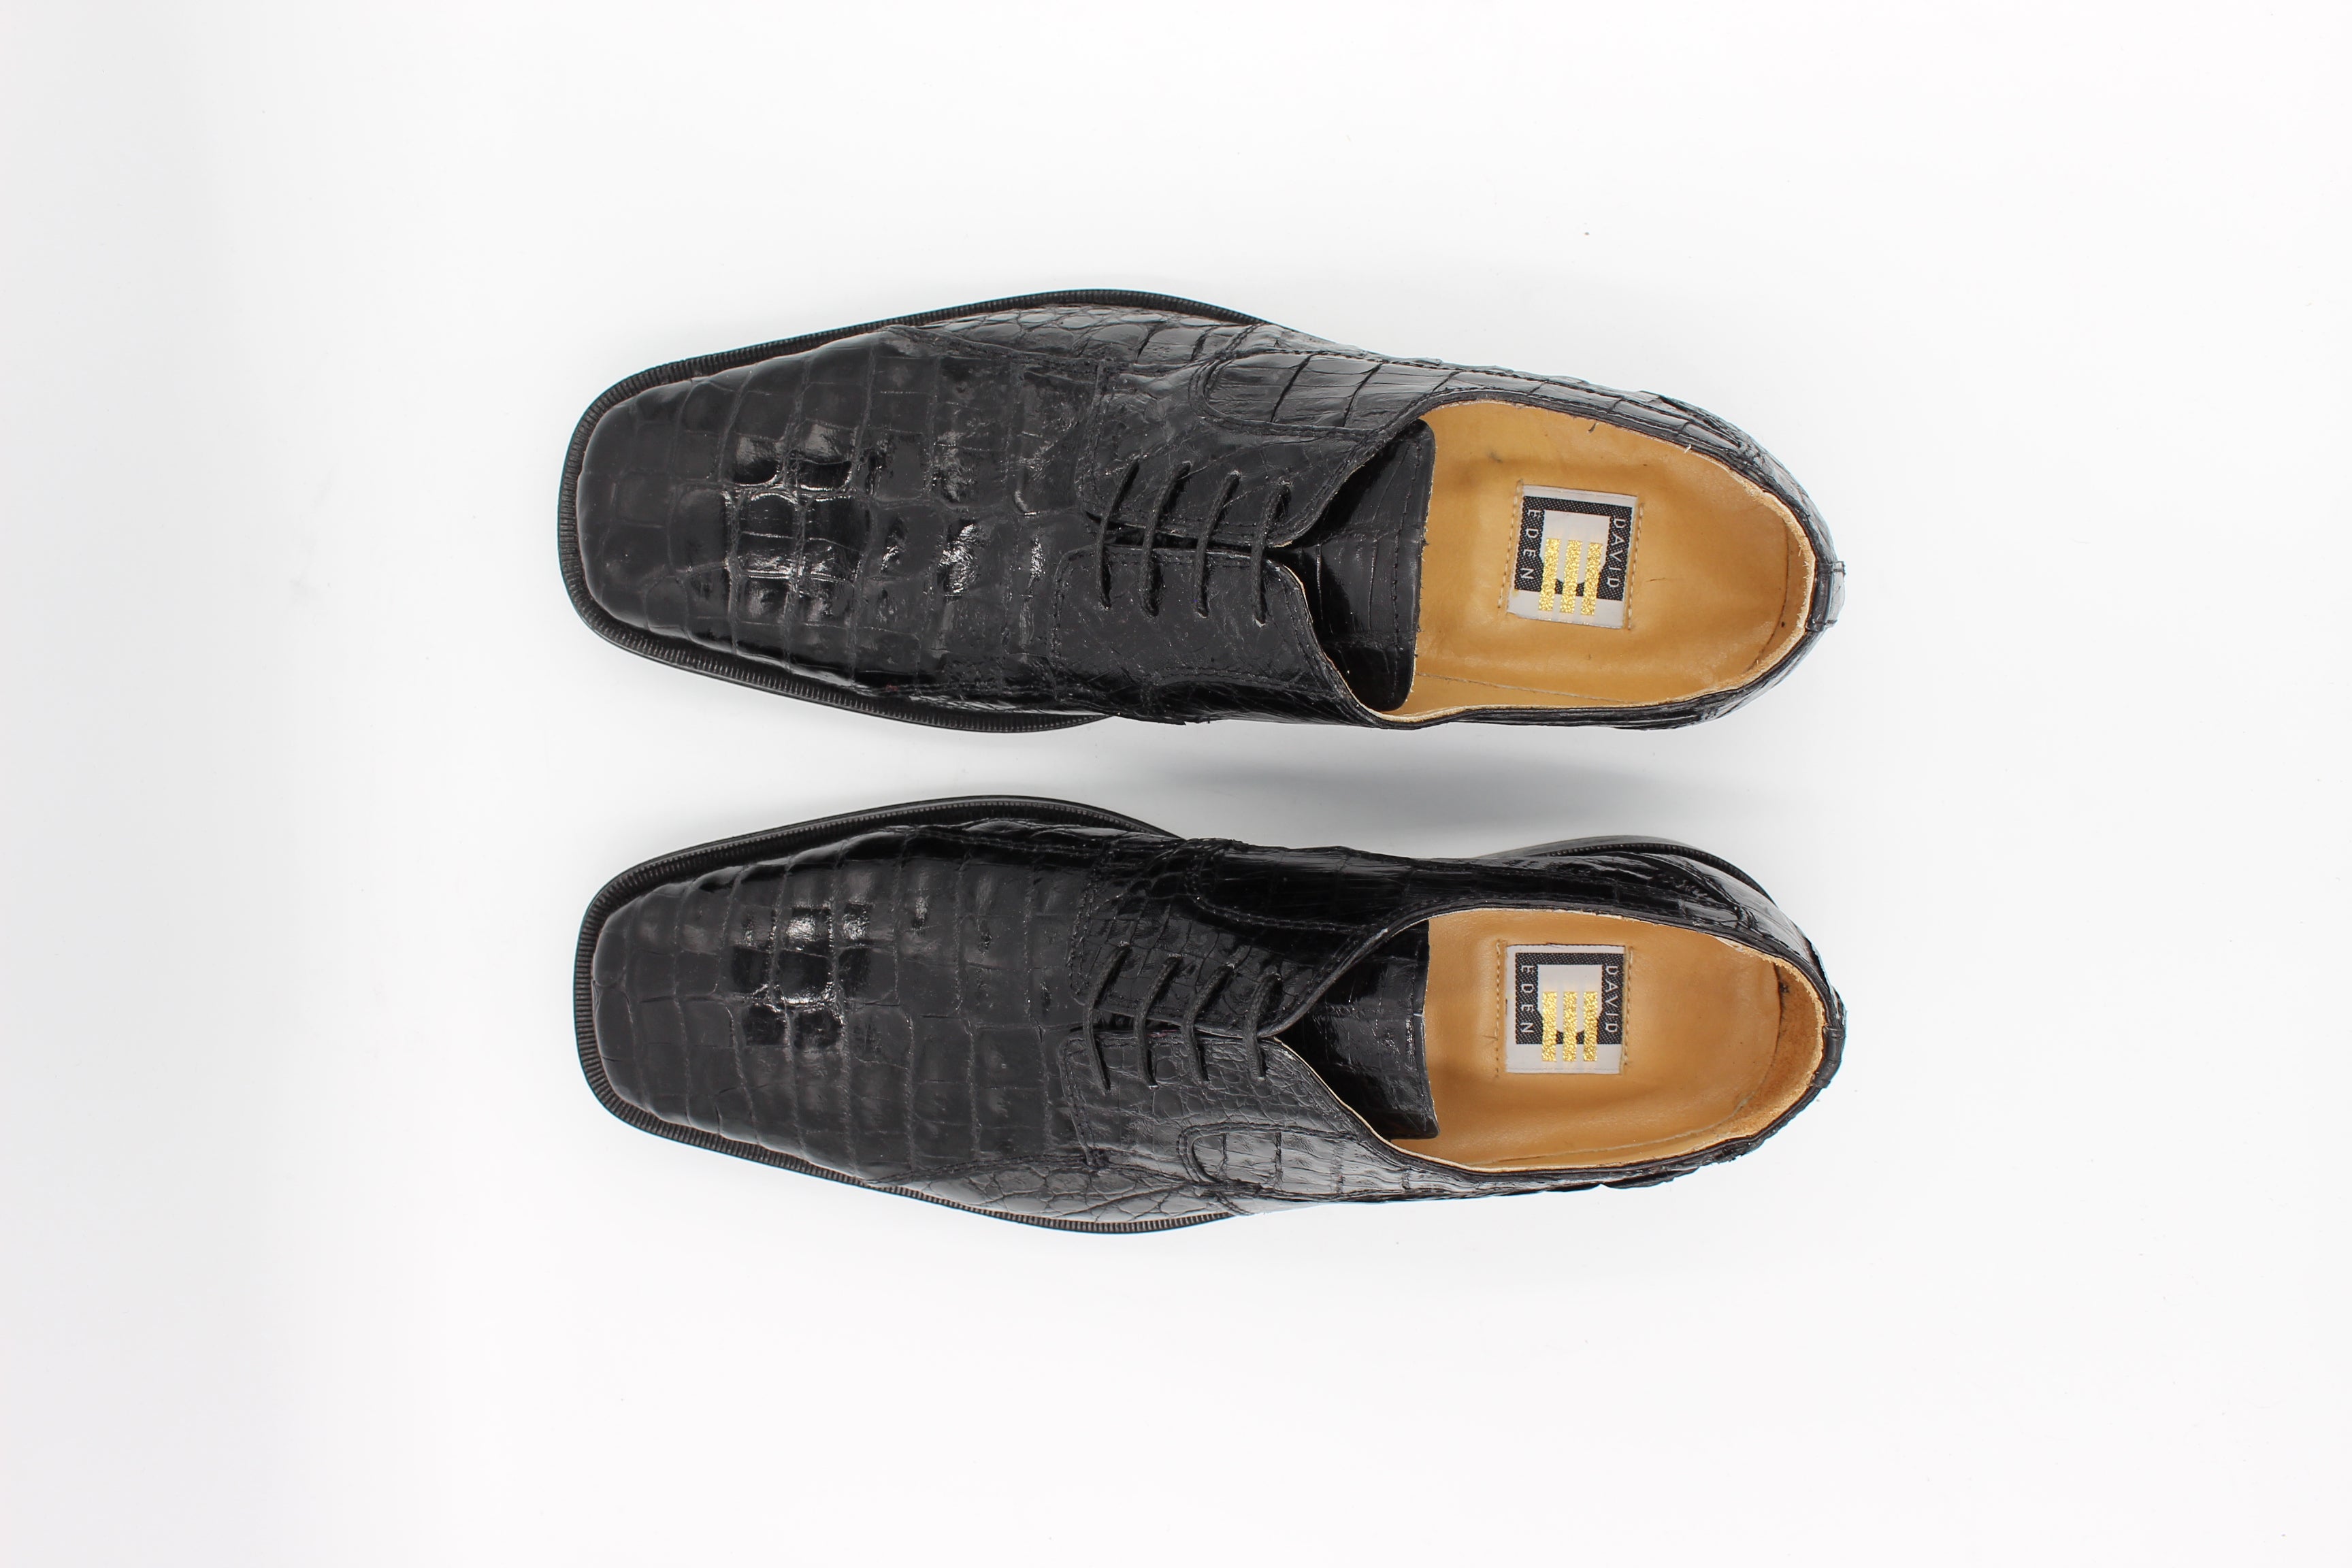 David Eden Unique Exotic Genuine Crocodile Leather Black Shoe Size 10